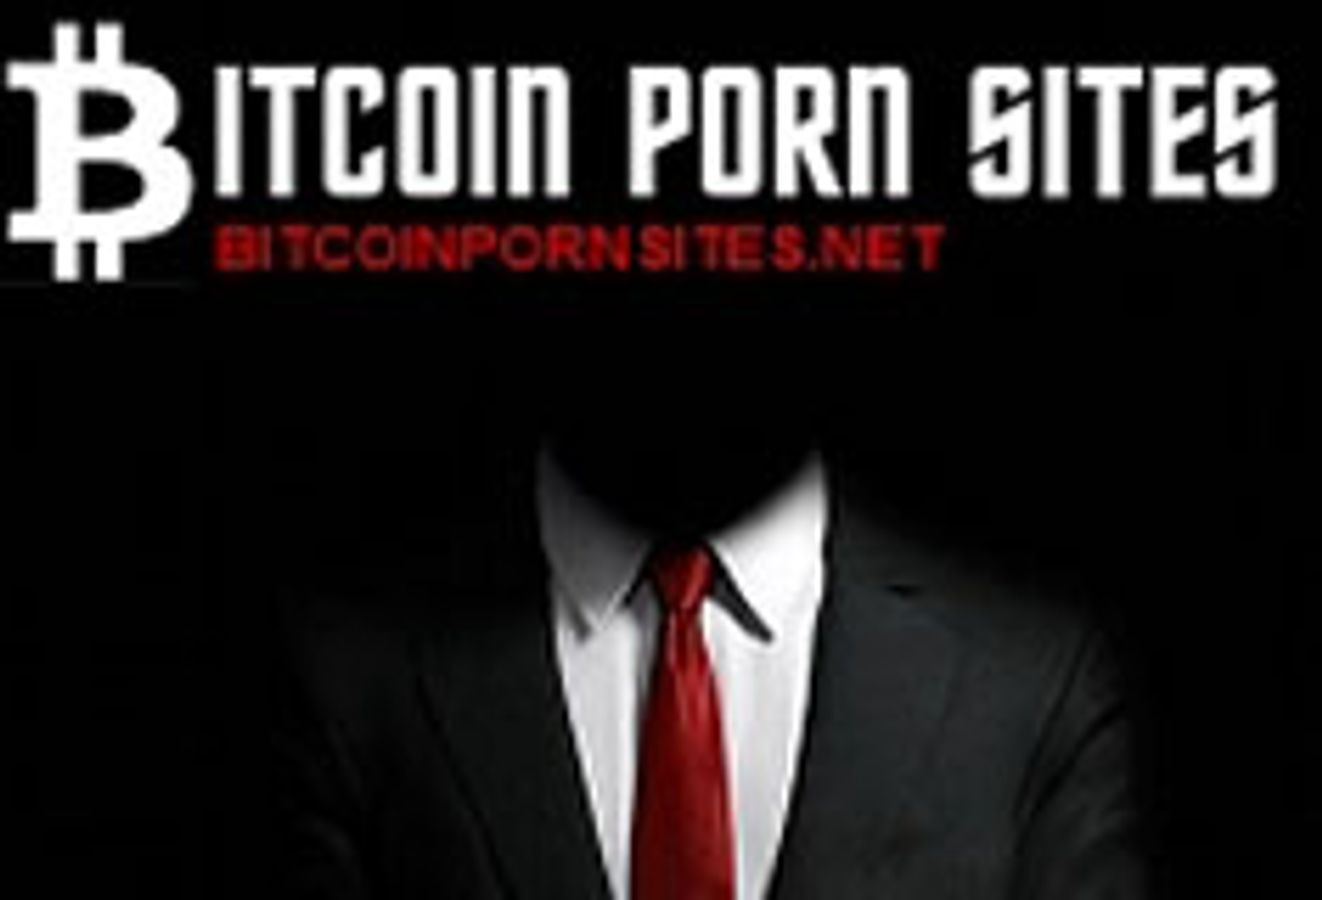 BitcoinPornSites.net